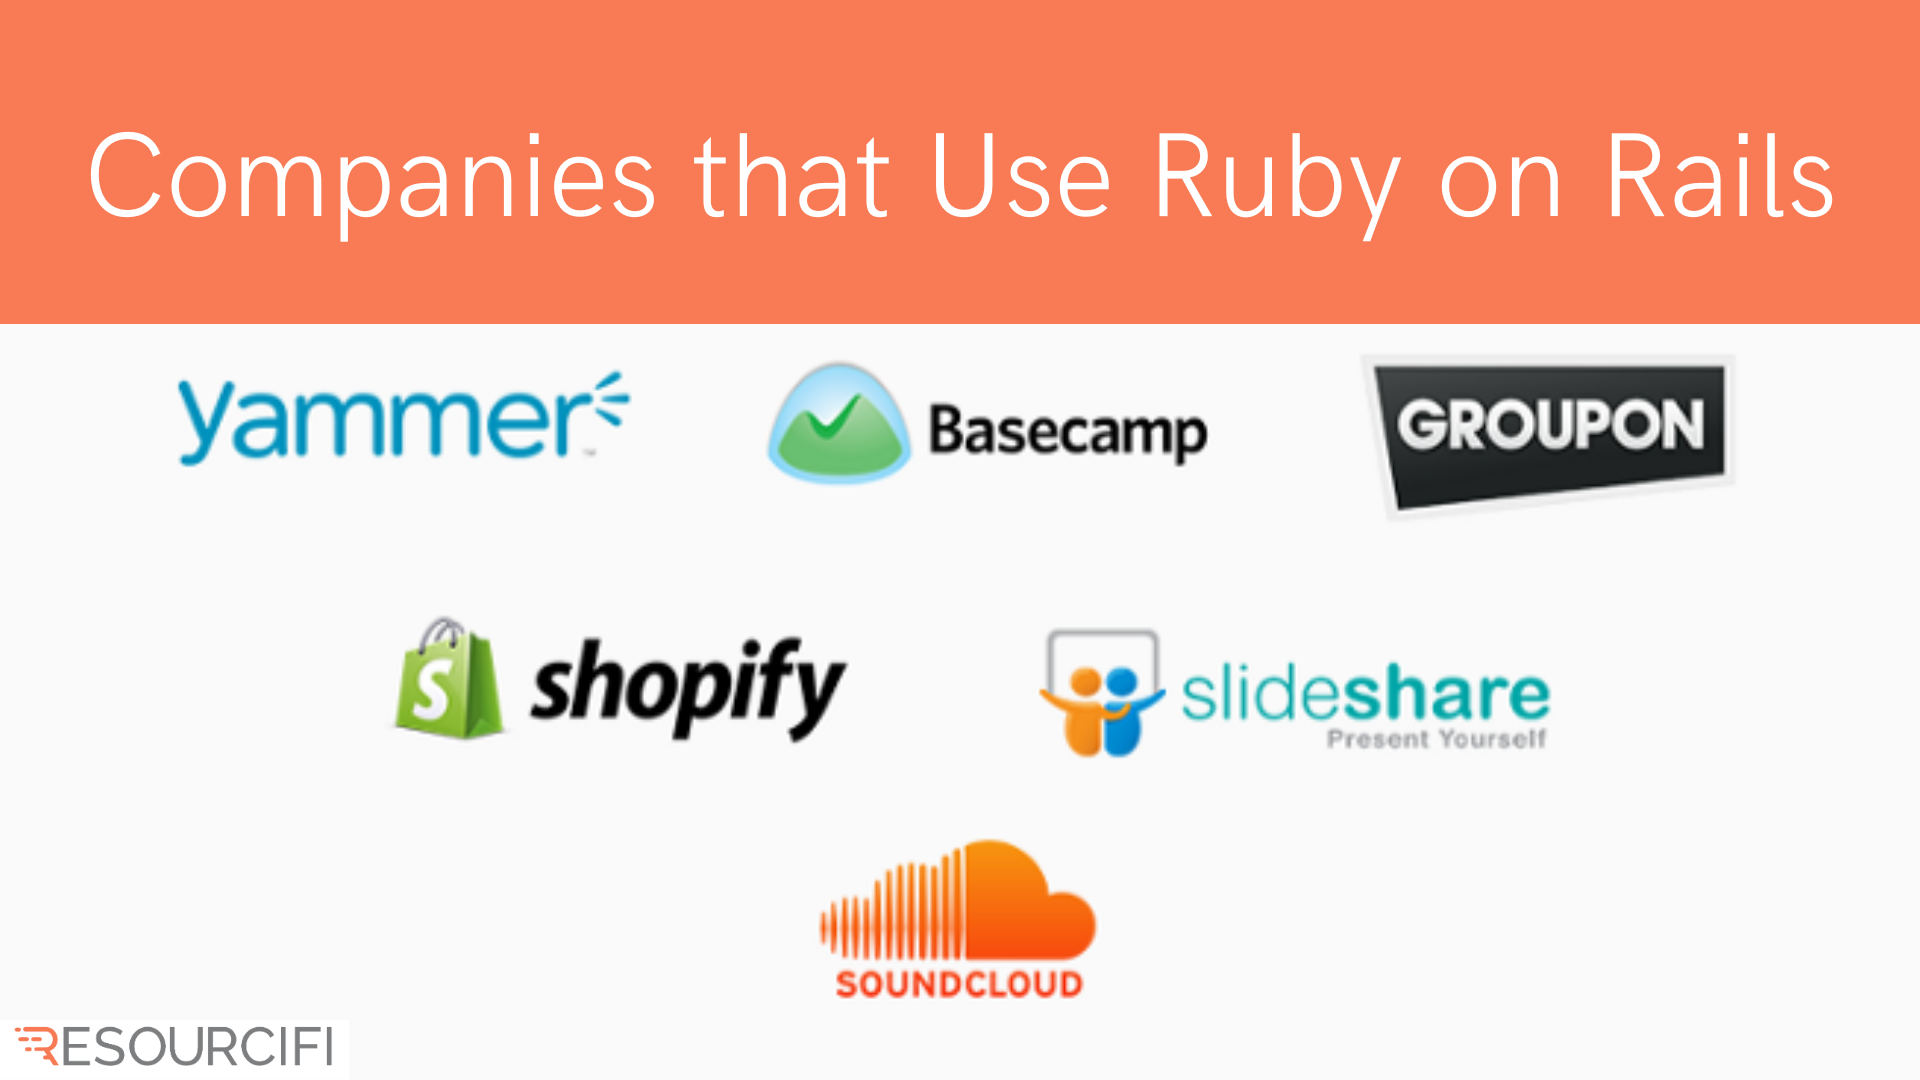 Companies using Ruby on Rails